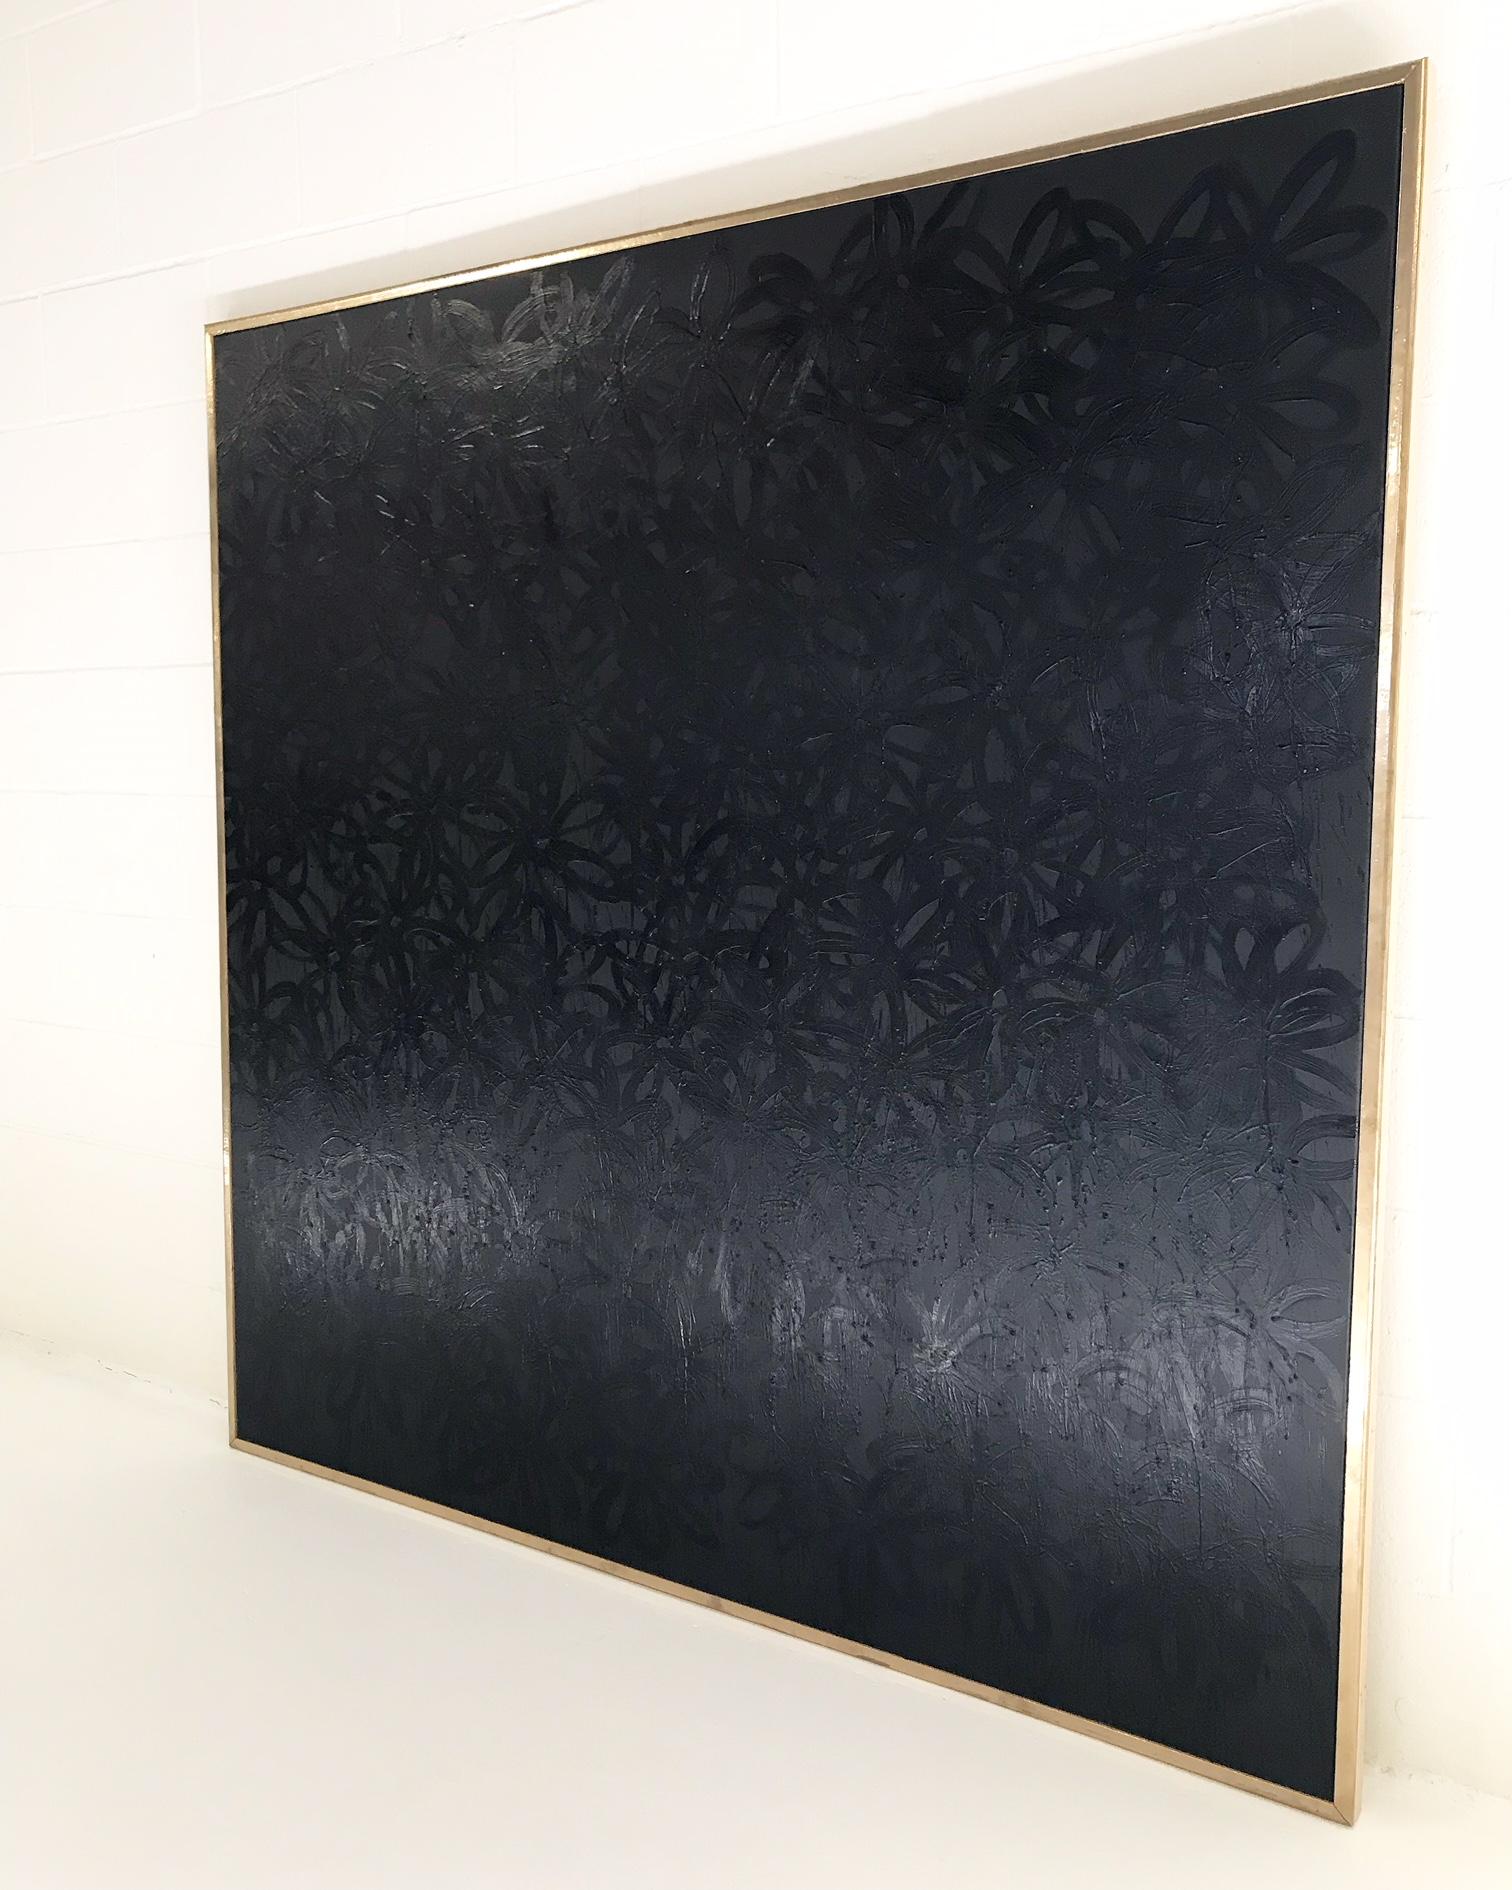 John O'Hara. 2018. Encaustic on canvas. Handmade frame, gold leaf on oak. In series.
Measure: 69 x 69